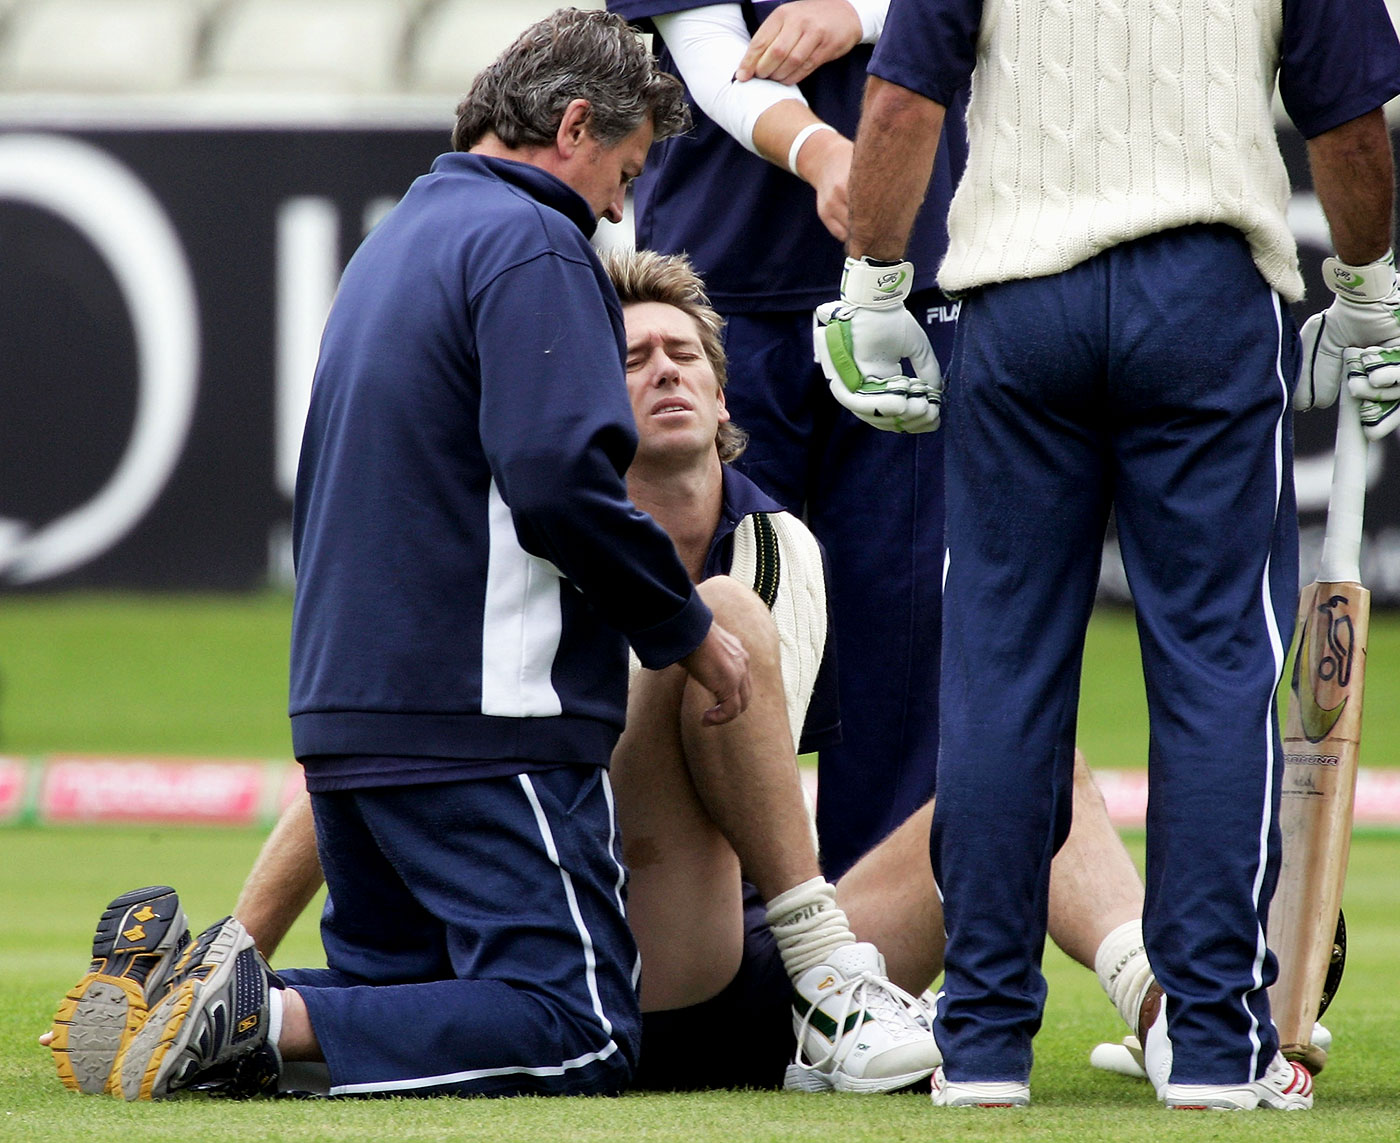 Glenn Mcgrath ankle injury at edgbaston during 2005 Ashes